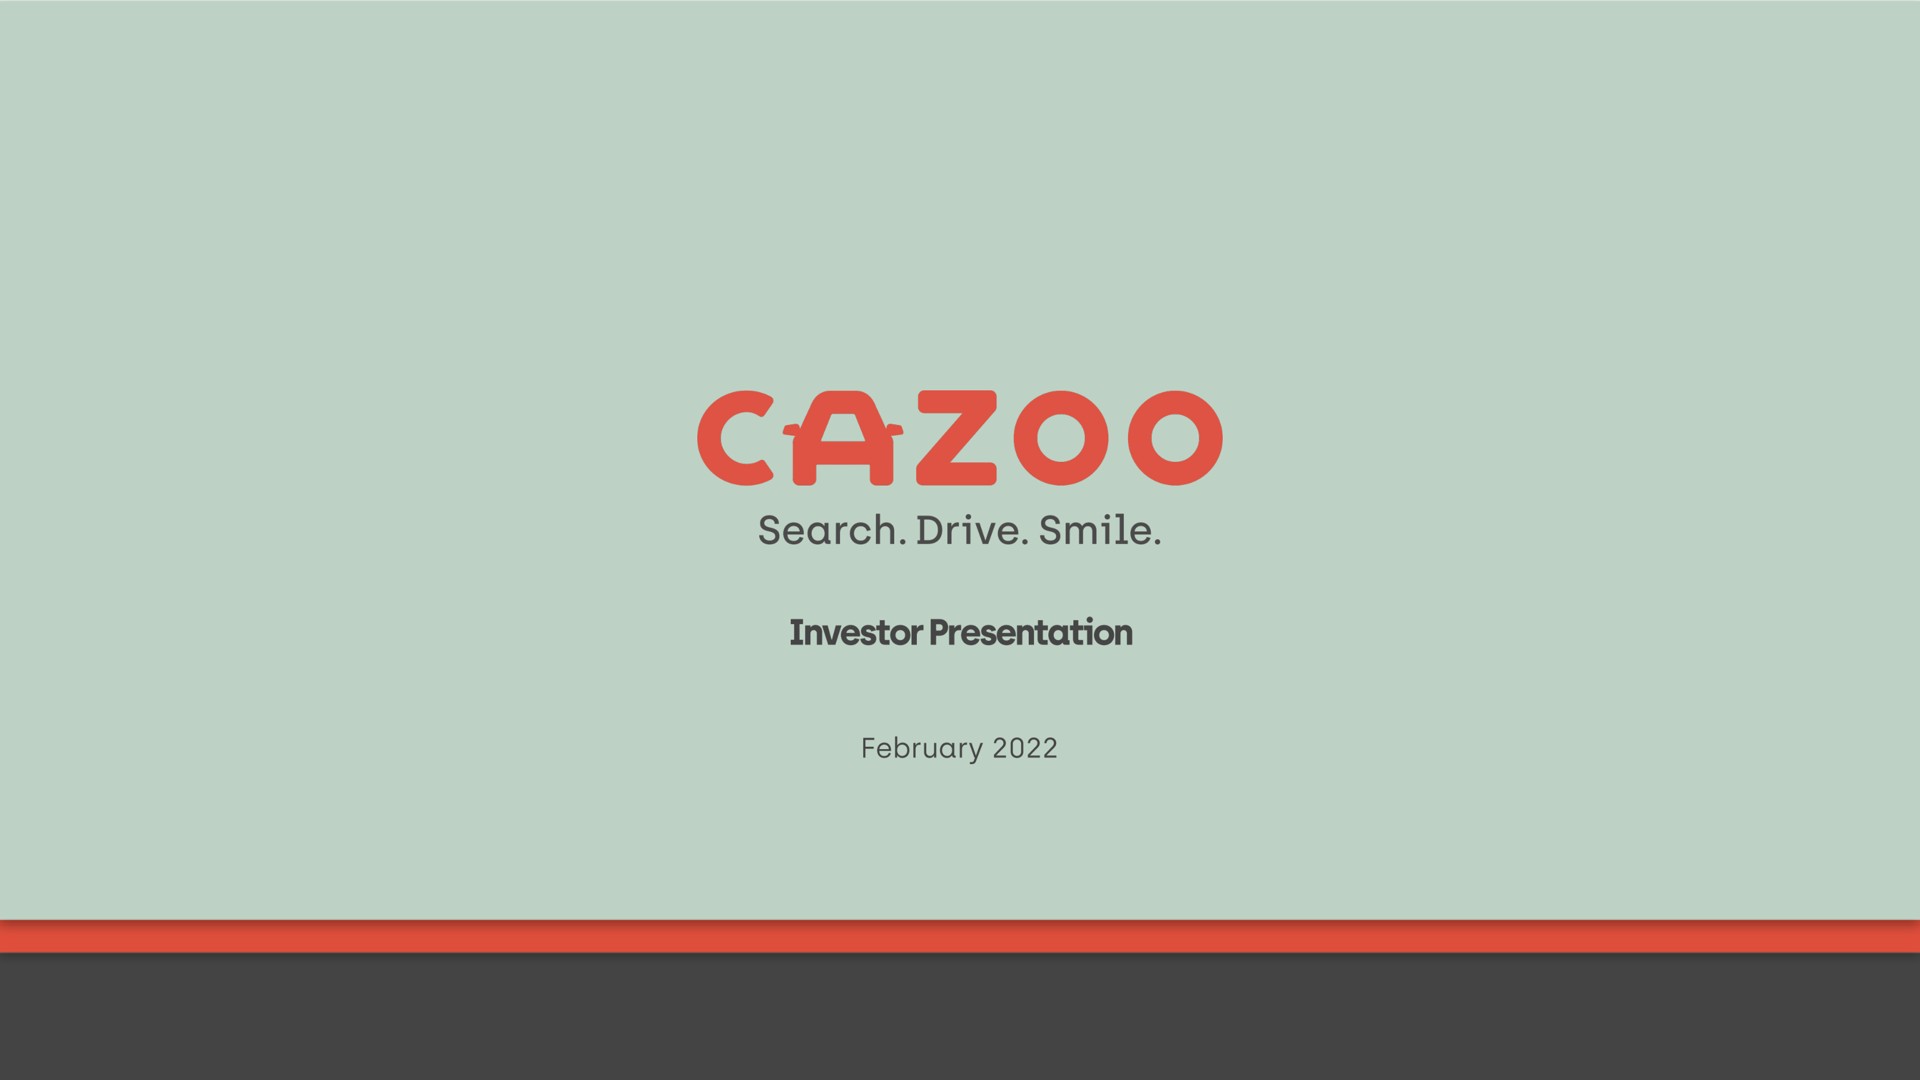 search drive smile | Cazoo